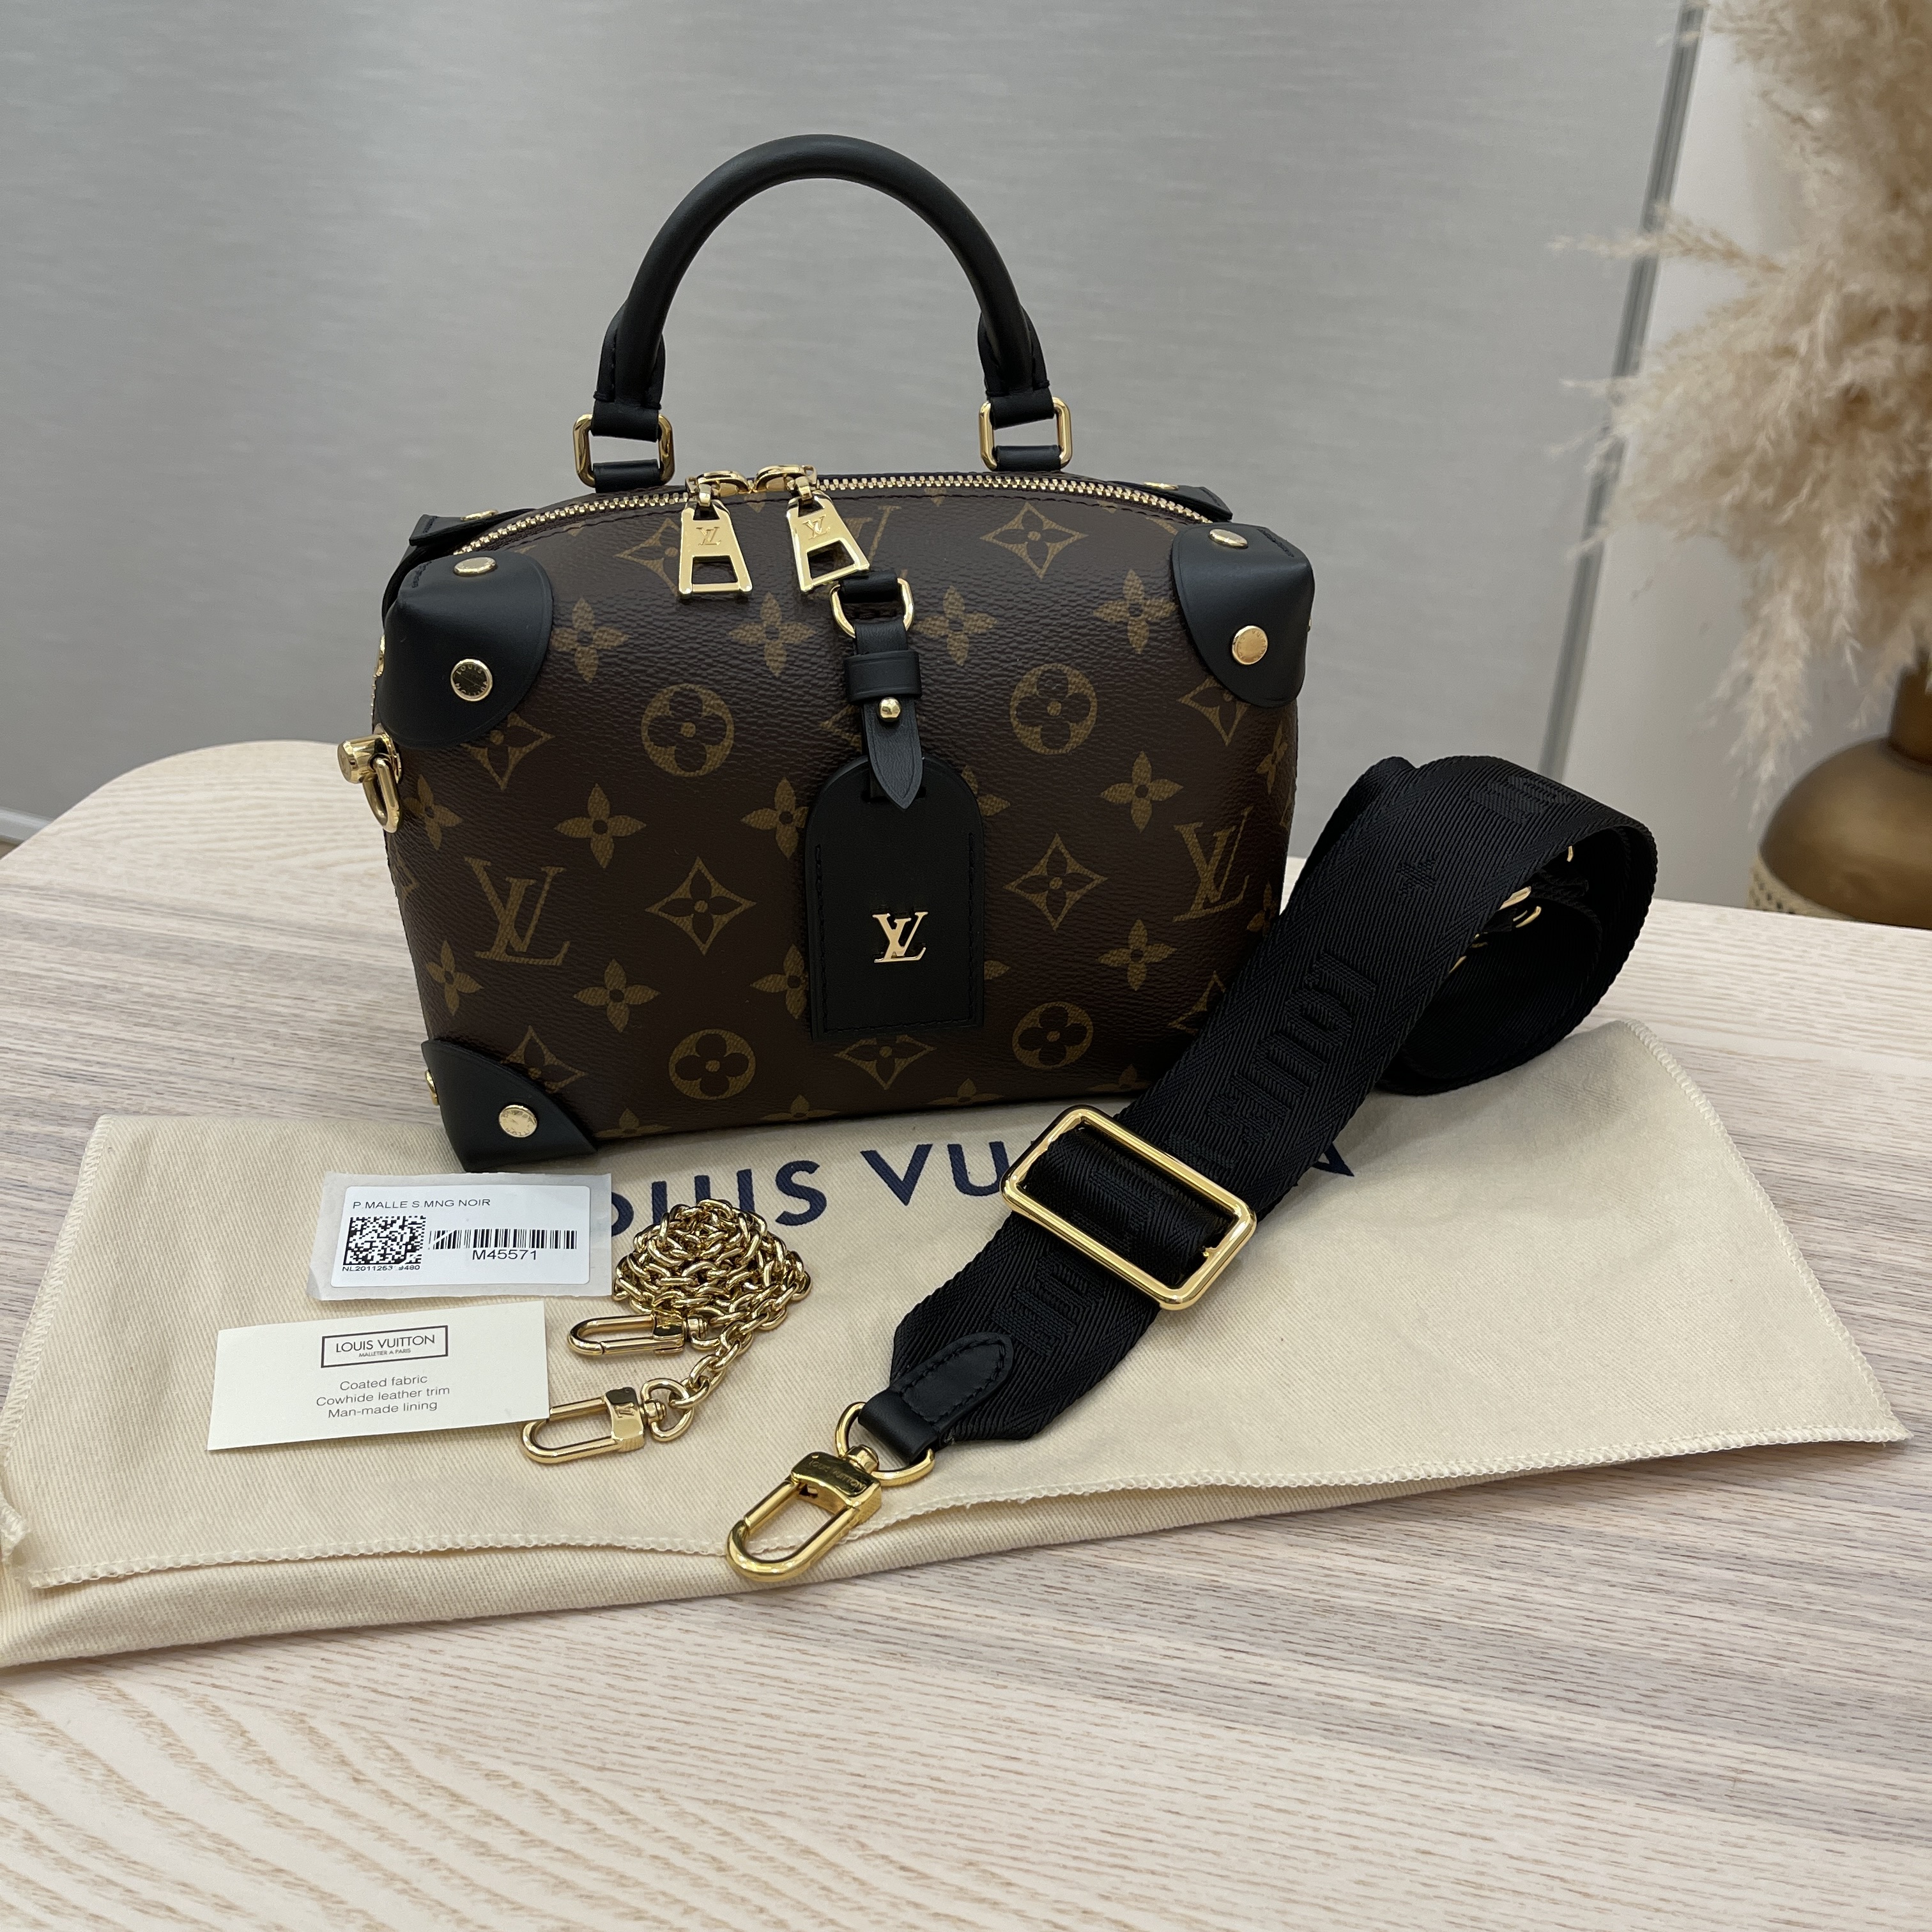 LV PETITE MALLE SOUPLE HANDBAG  Bags, Chanel bag, Bags designer